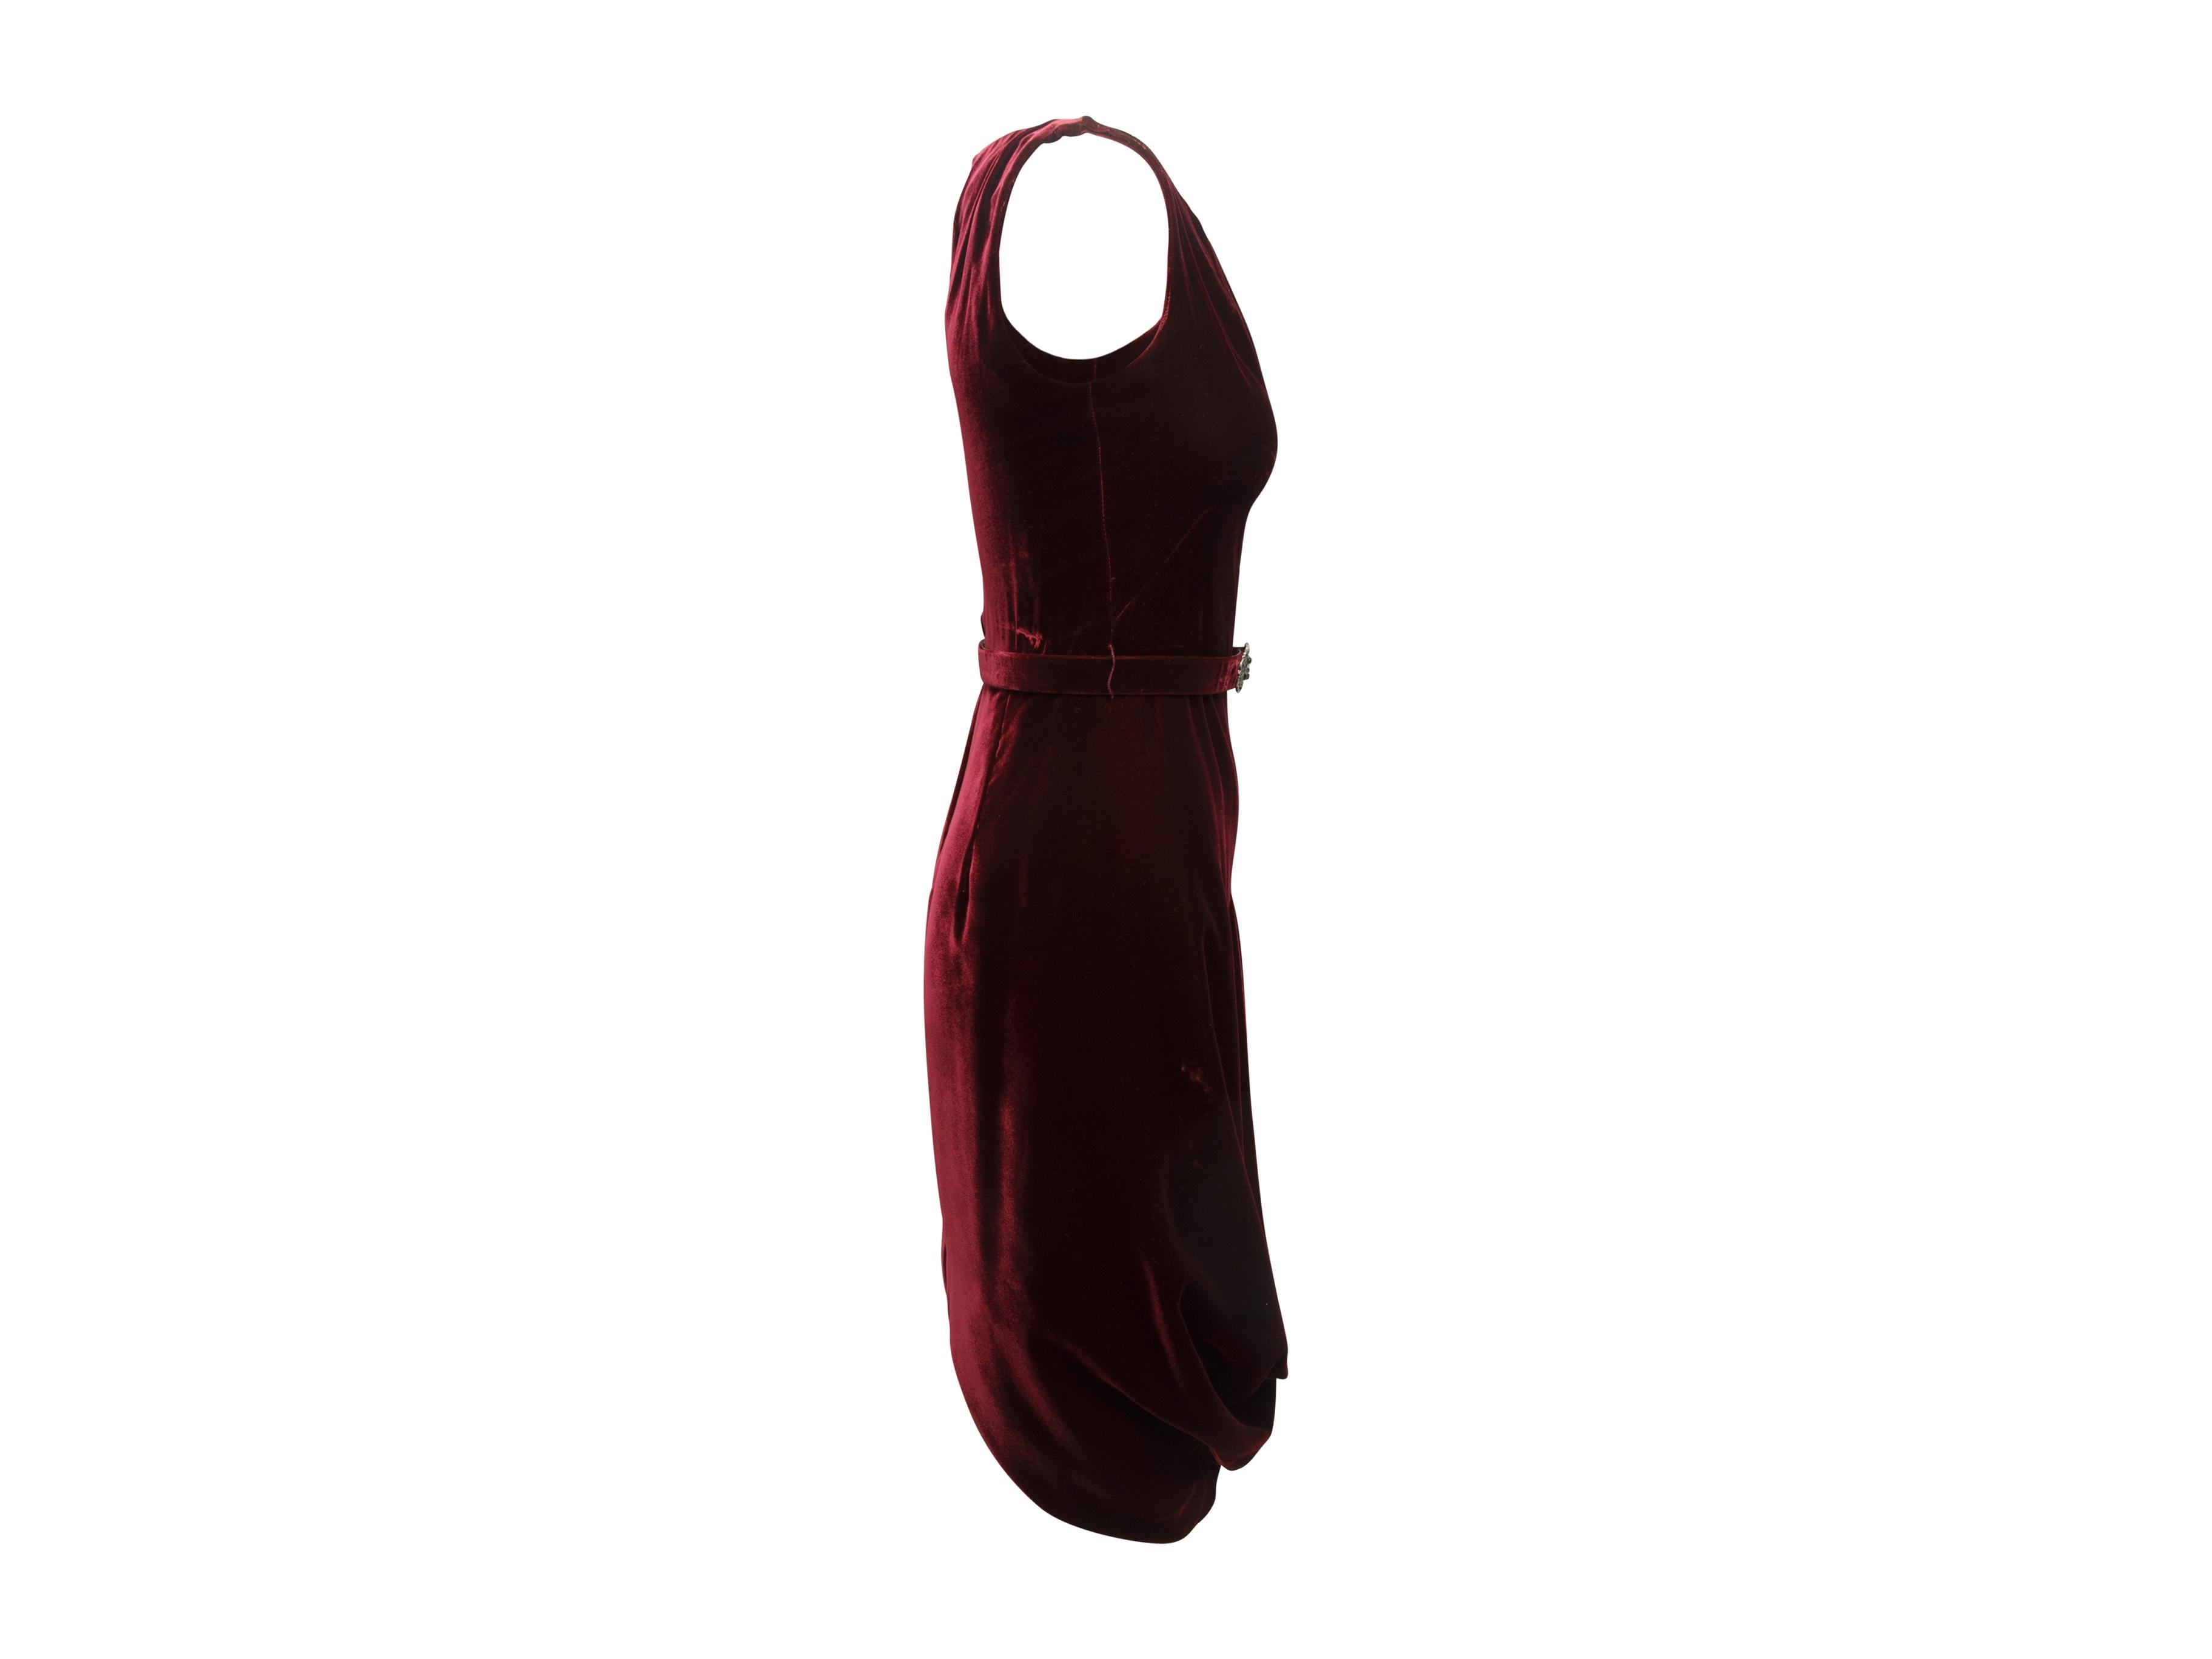 Product details: Burgundy sleeveless velvet dress by Alexander McQueen. Round neckline. Draping at skirt. Belt accent at waist. Zip closure at back. Designer size 40. 32